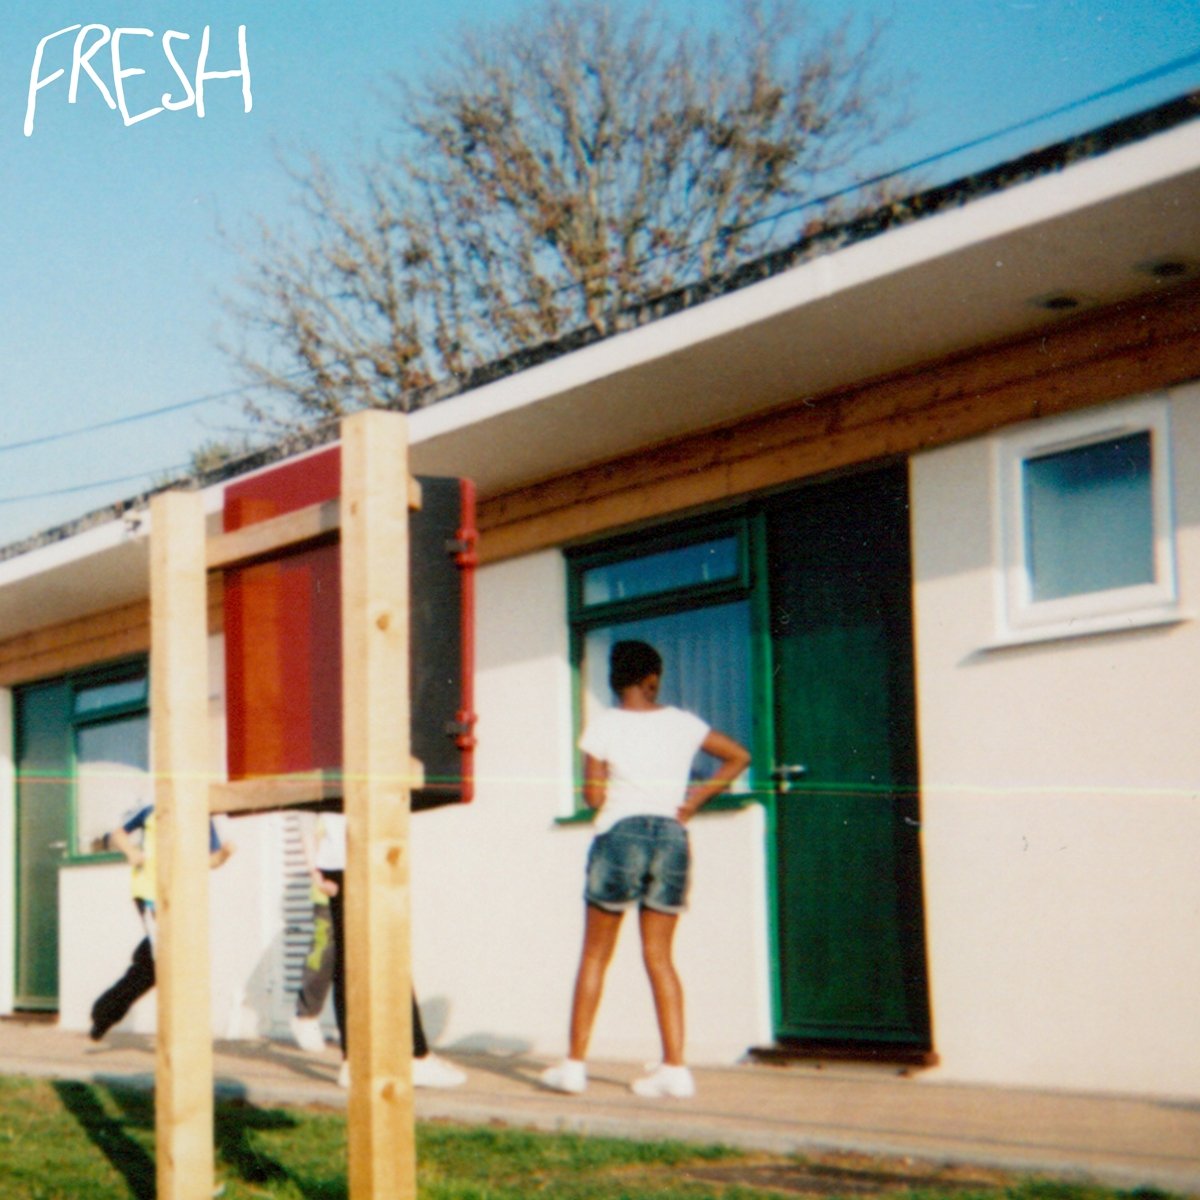 Fresh (+Download) [Vinyl LP]